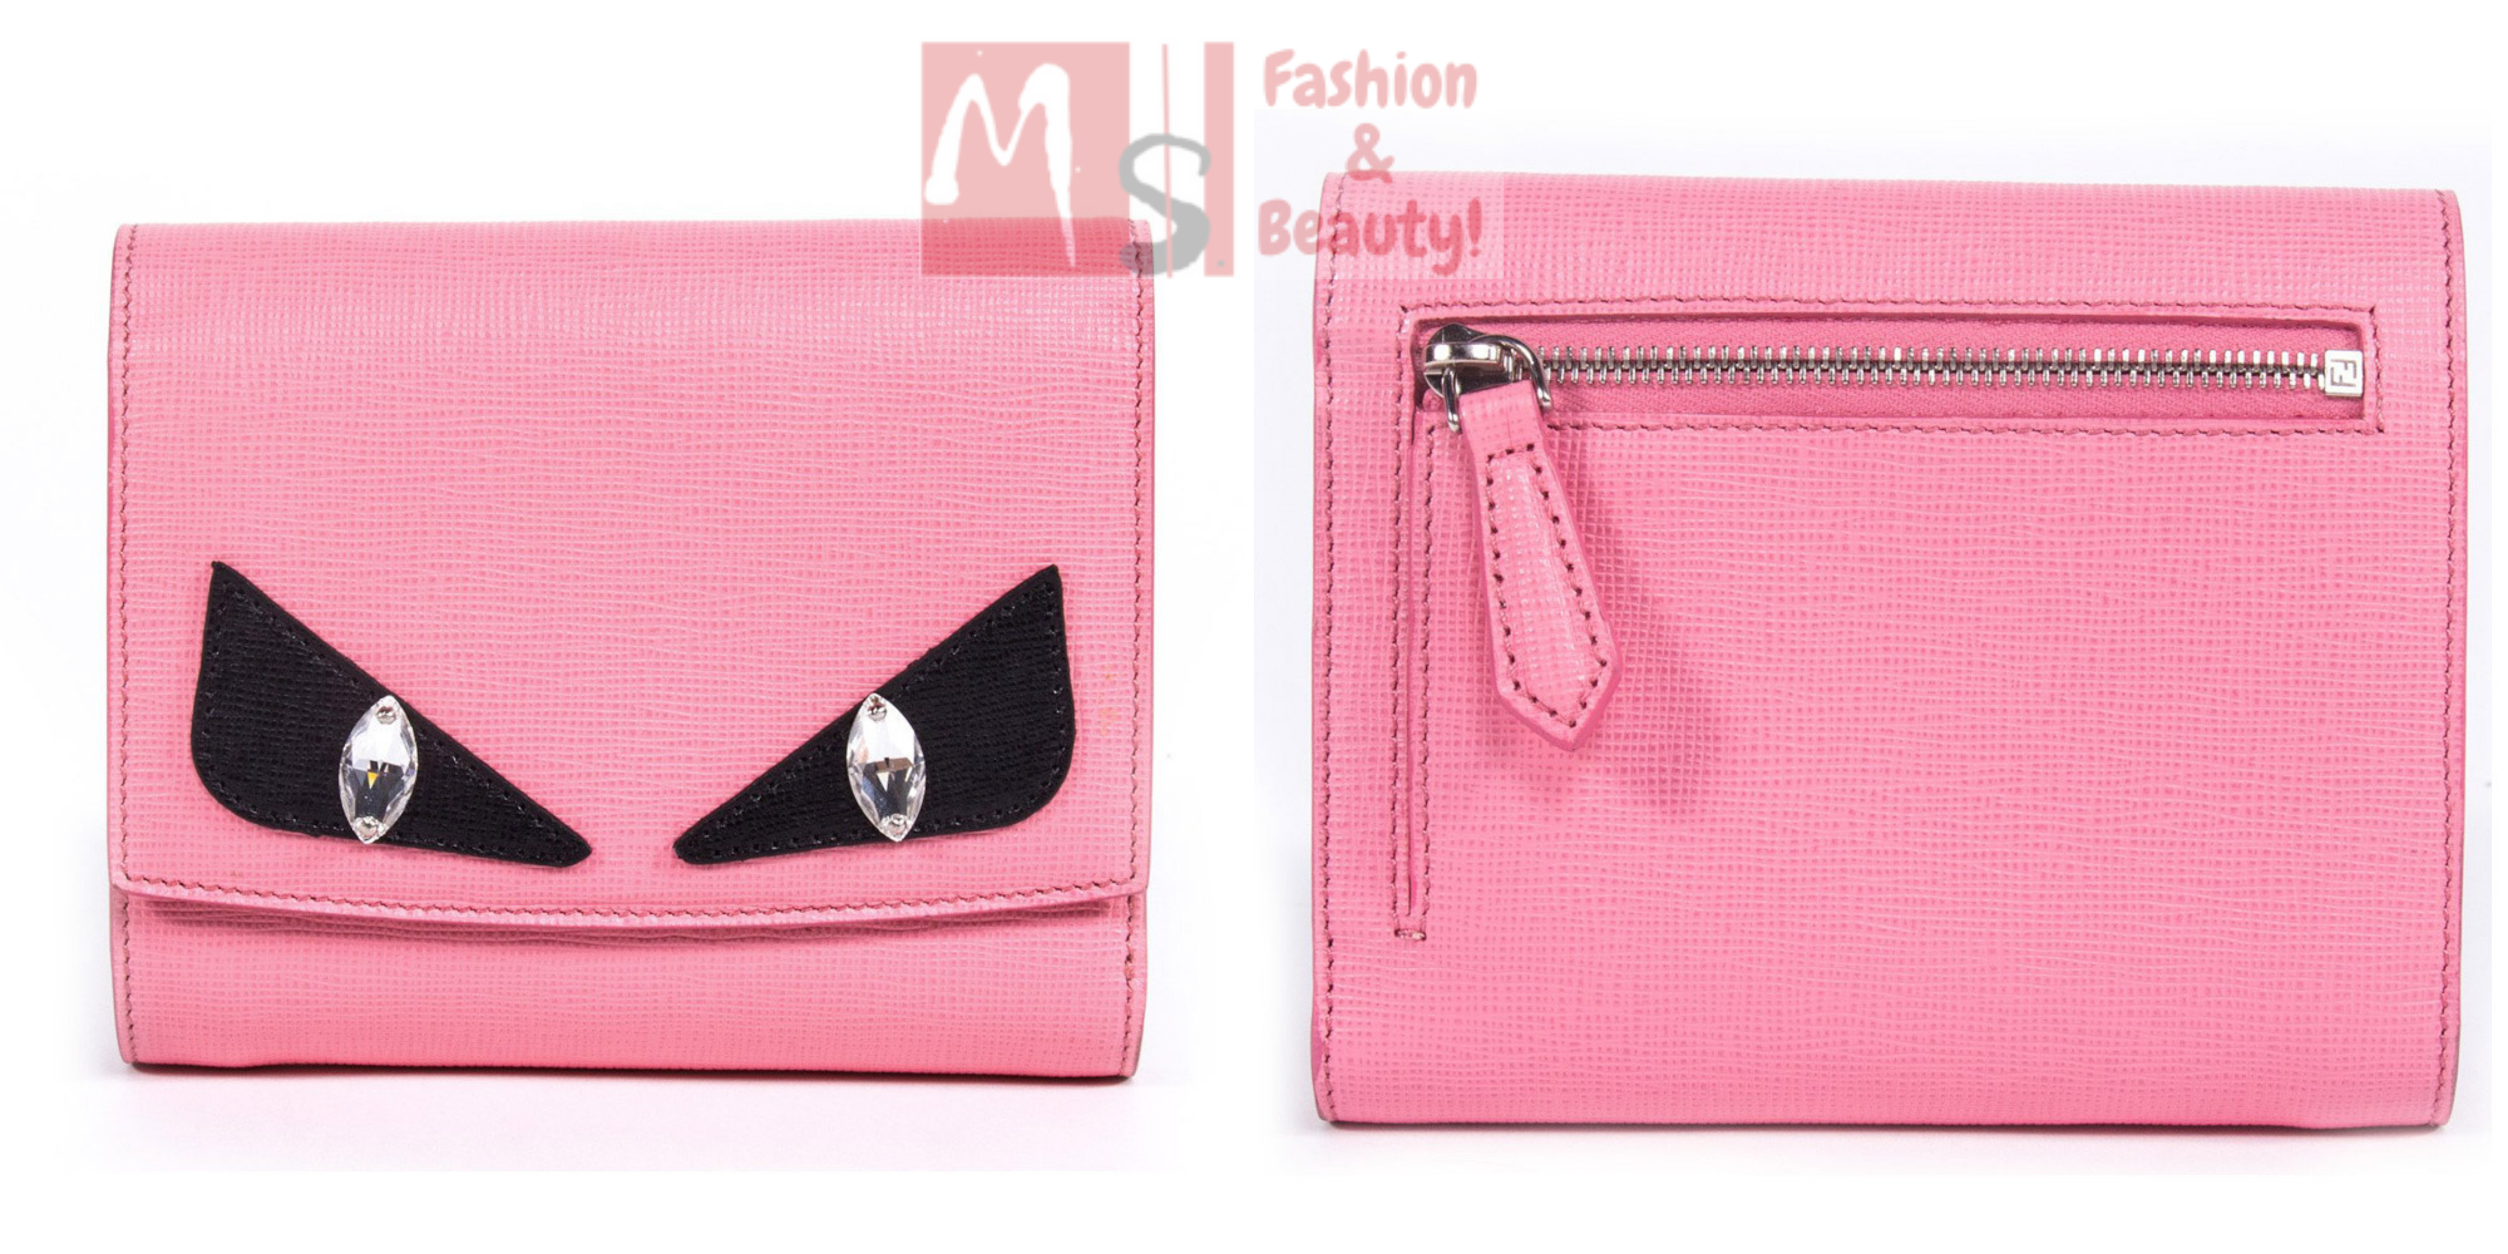 Buy Affordable and Designer Fendi Bags Australia